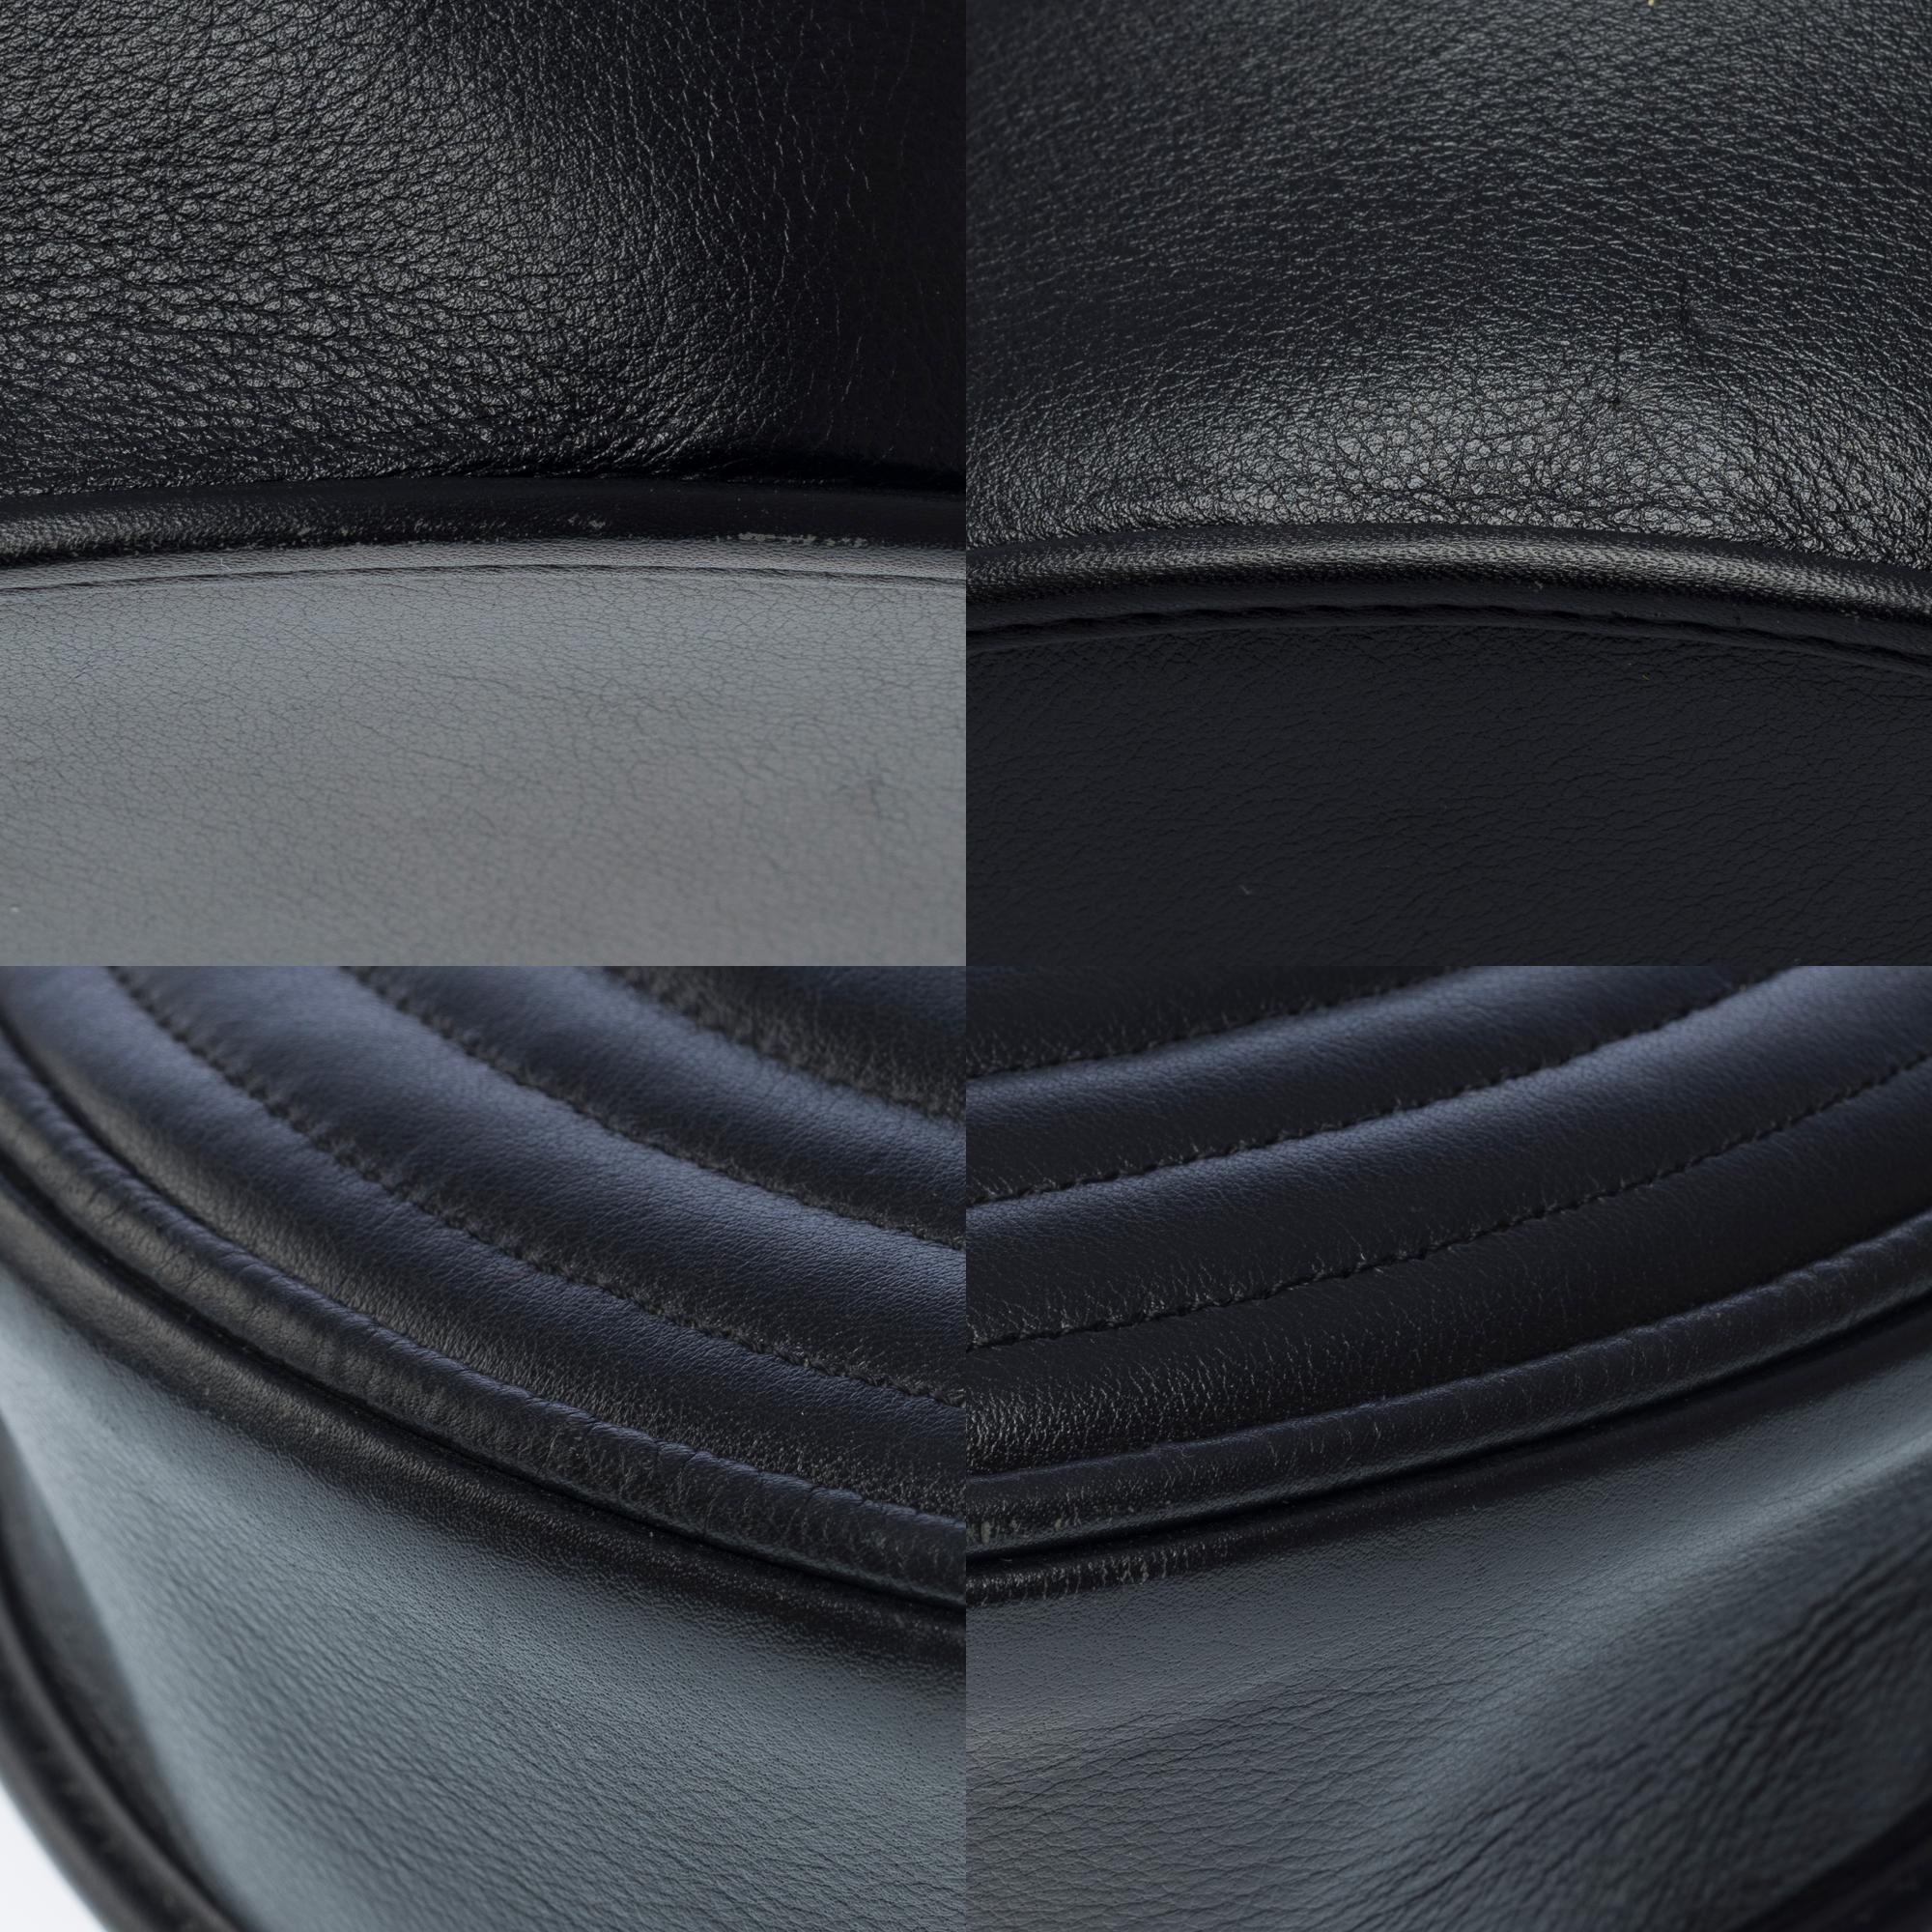 Lovely YSL shoulder bag in the shape of a half moon in black leather, GHW 7